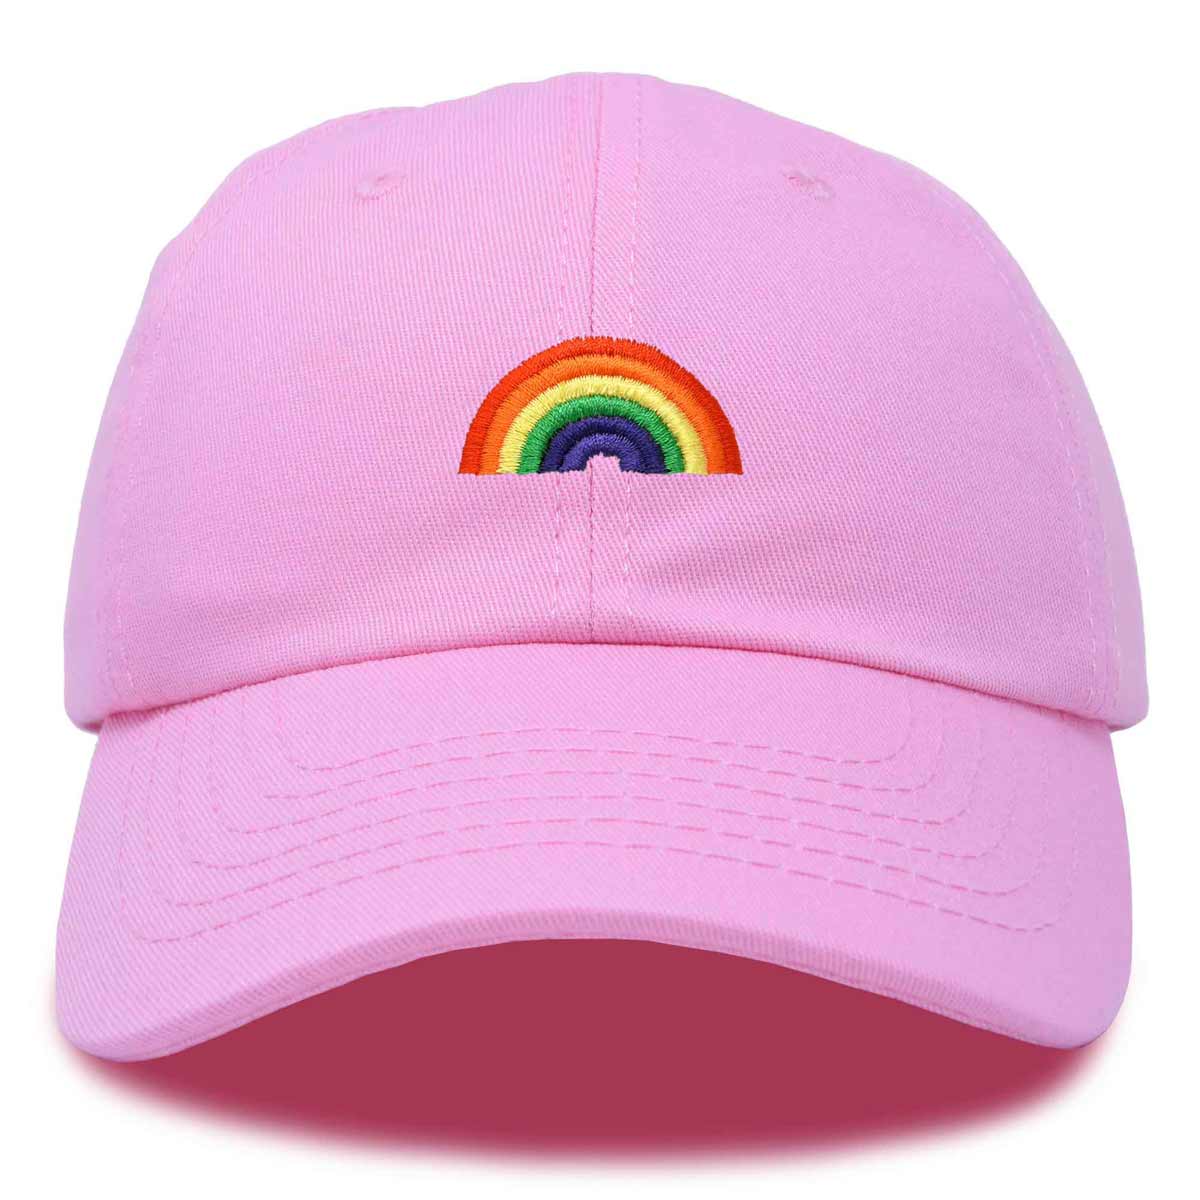 Rainbow Baseball Cap - Pink